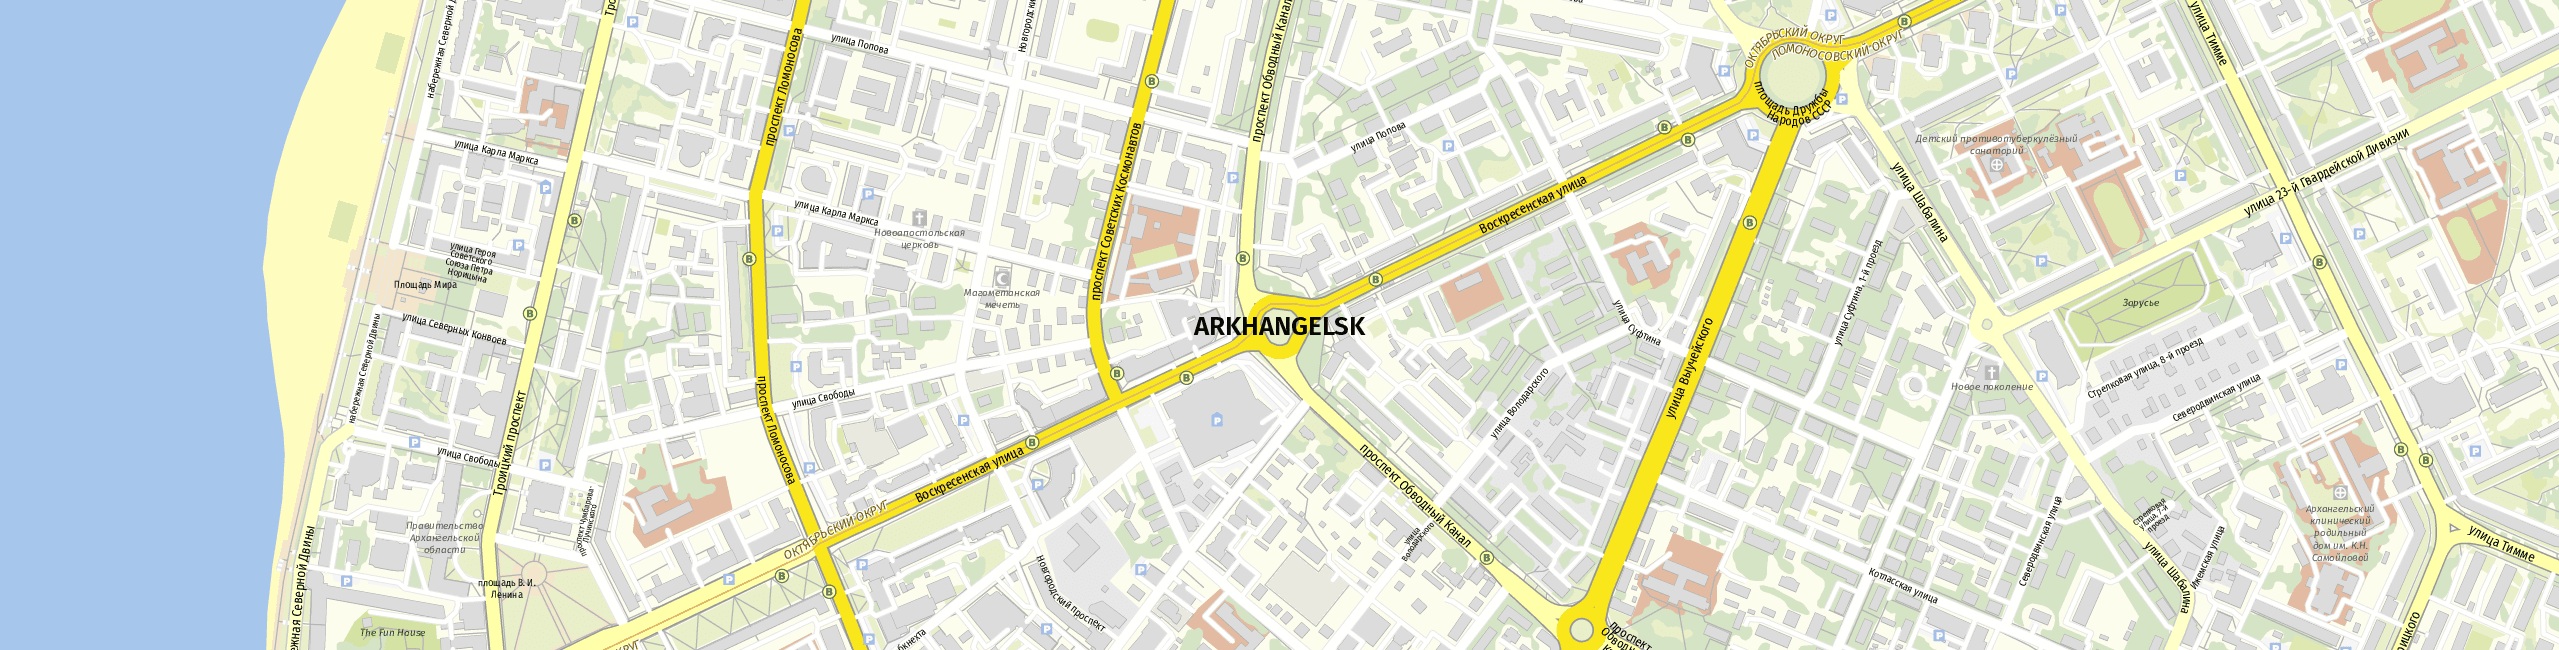 Stadtplan Archangelsk zum Downloaden.